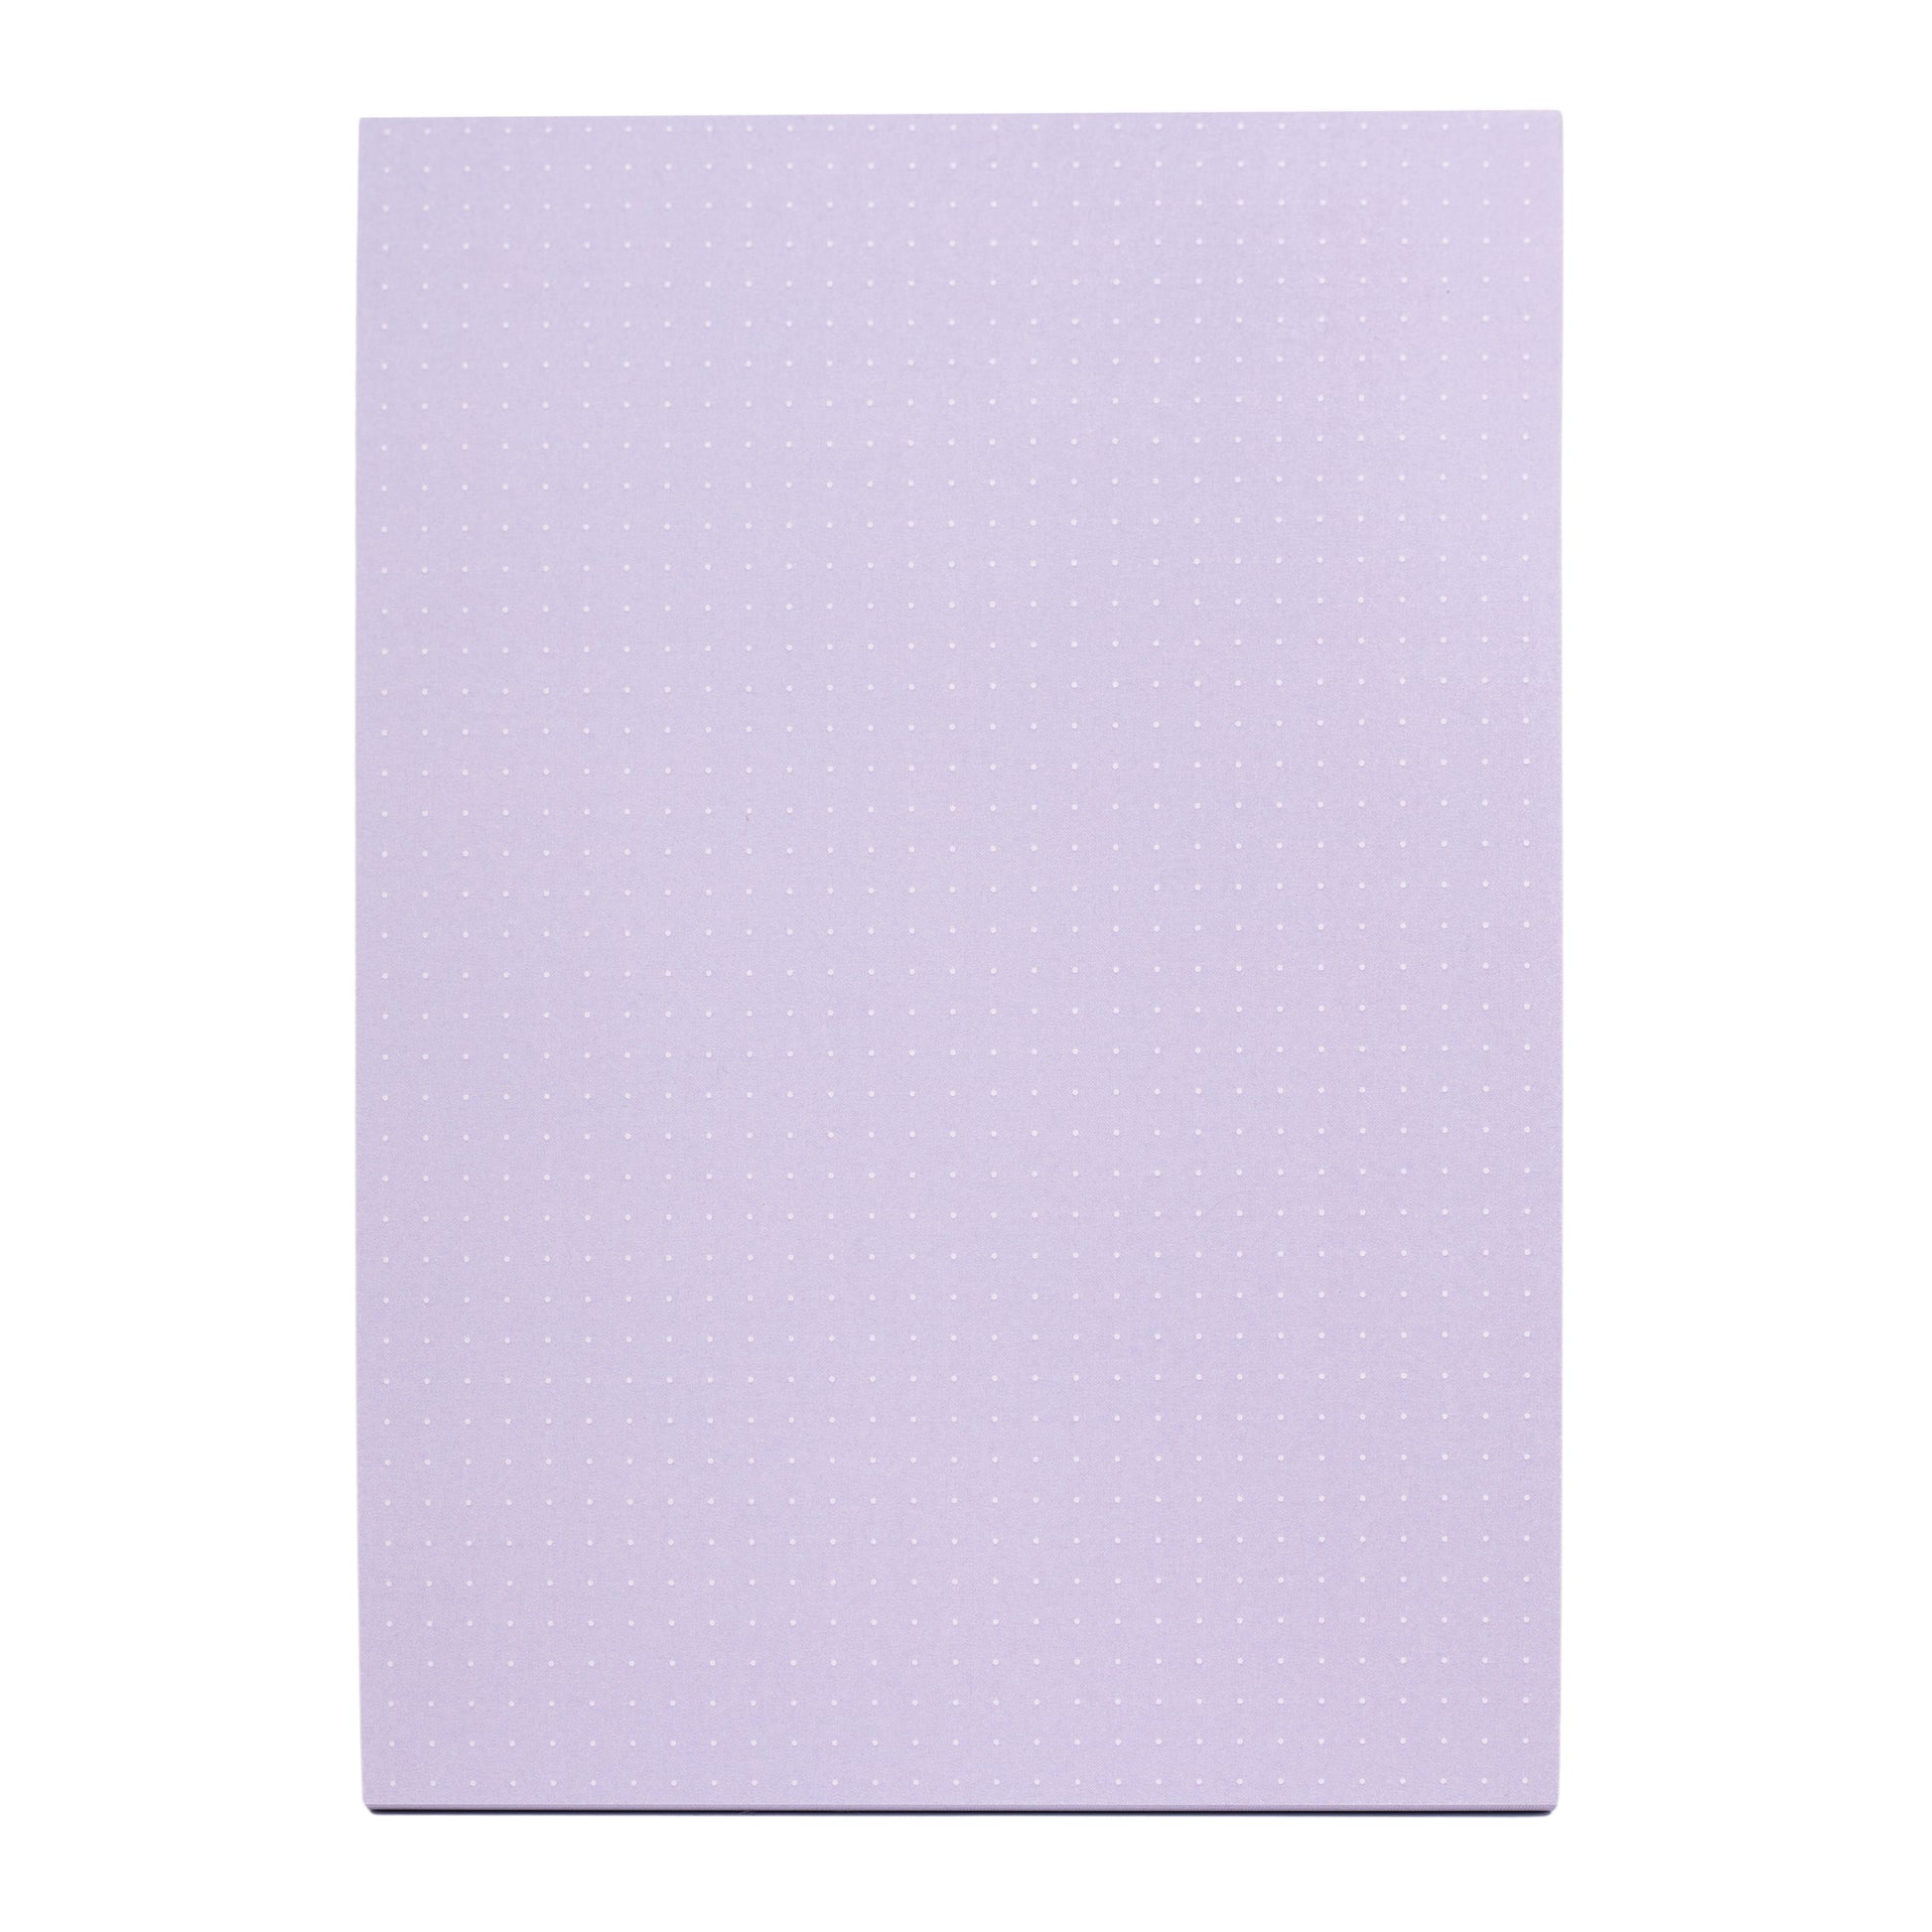 Dot Grid Journal Paper Pad